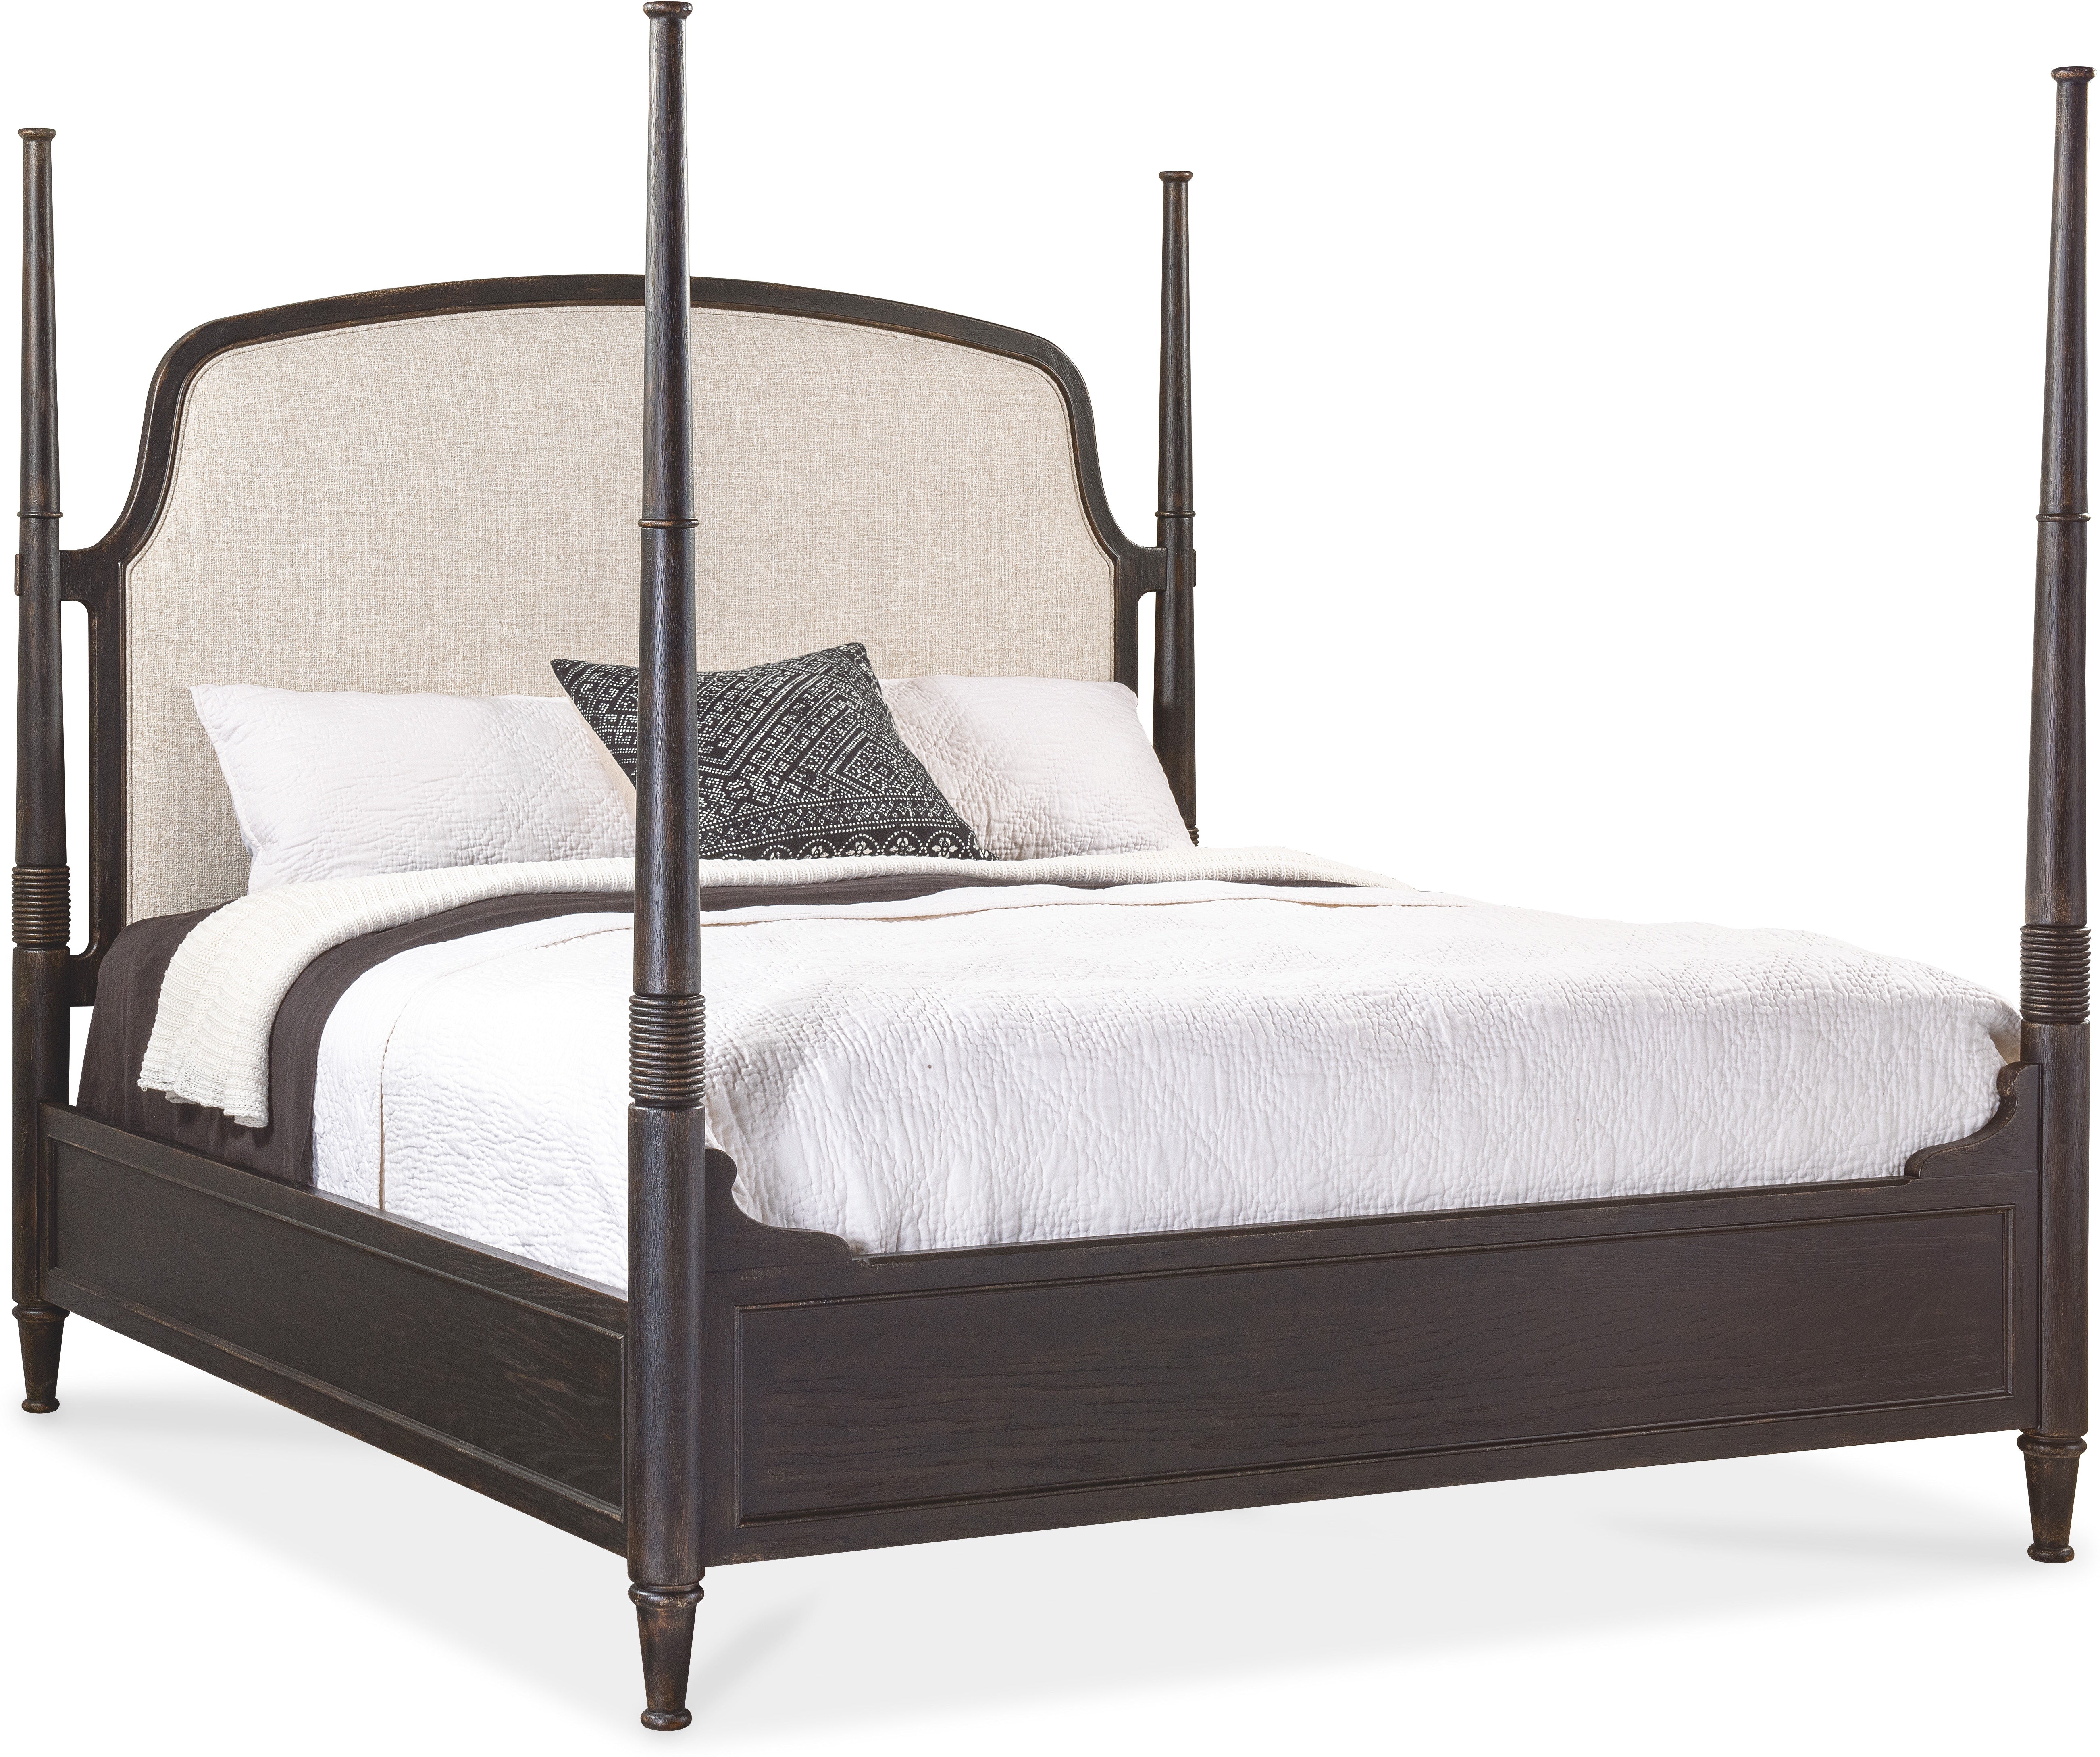 Hooker Furniture Bedroom Americana Queen Upholstered Poster Bed